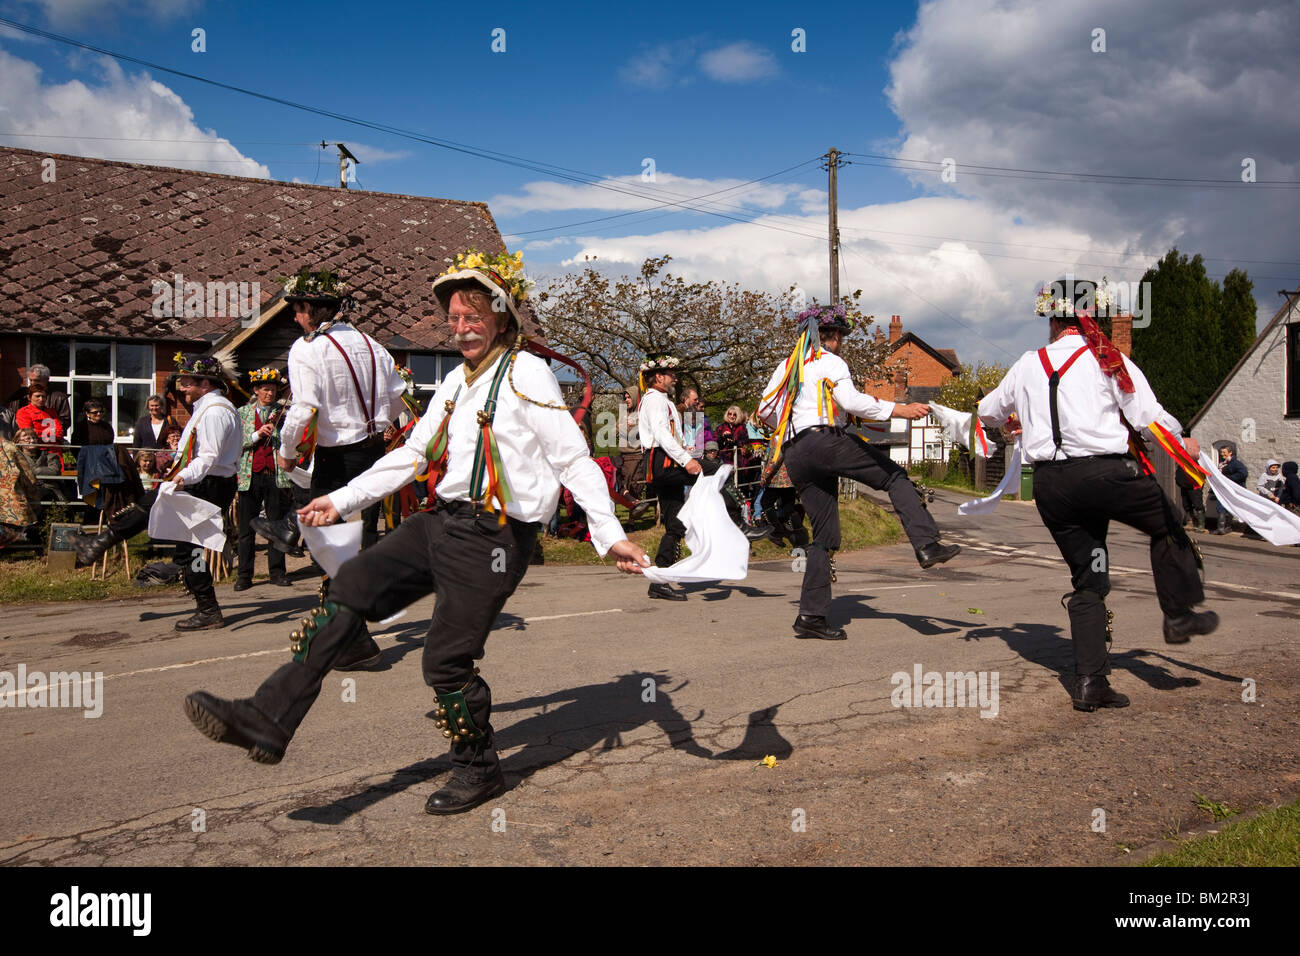 UK, England, Herefordshire, Putley, Big Apple Event, Morris men dancing on village green in sunshine Stock Photo